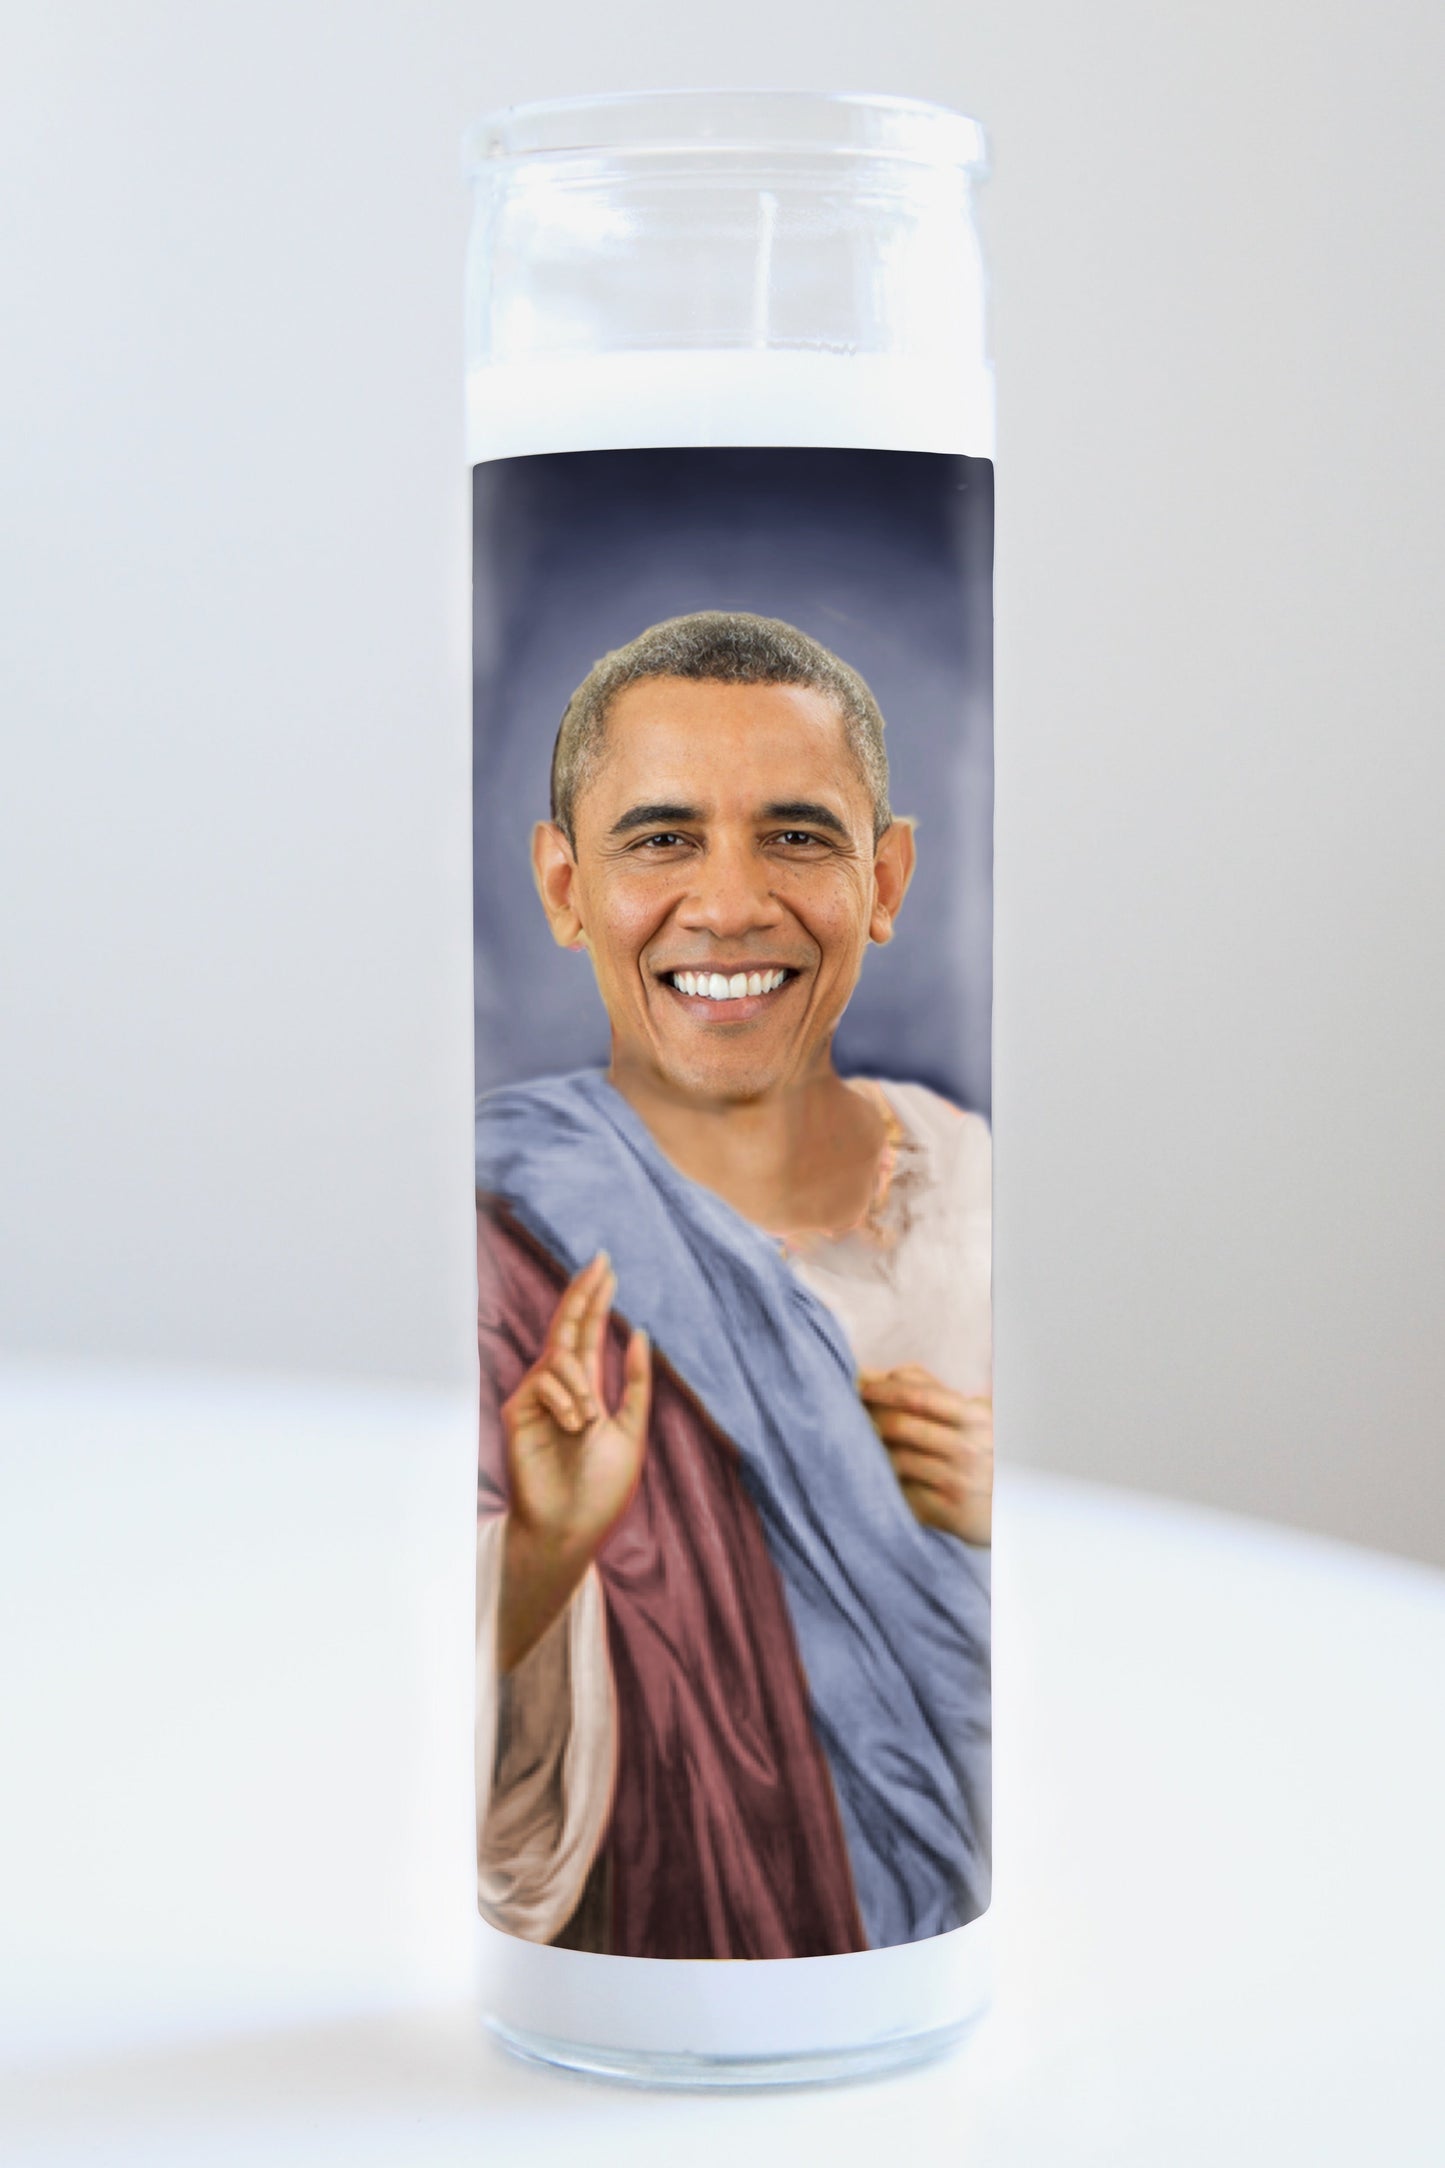 Barack Obama Purple/Blue Robe Candle